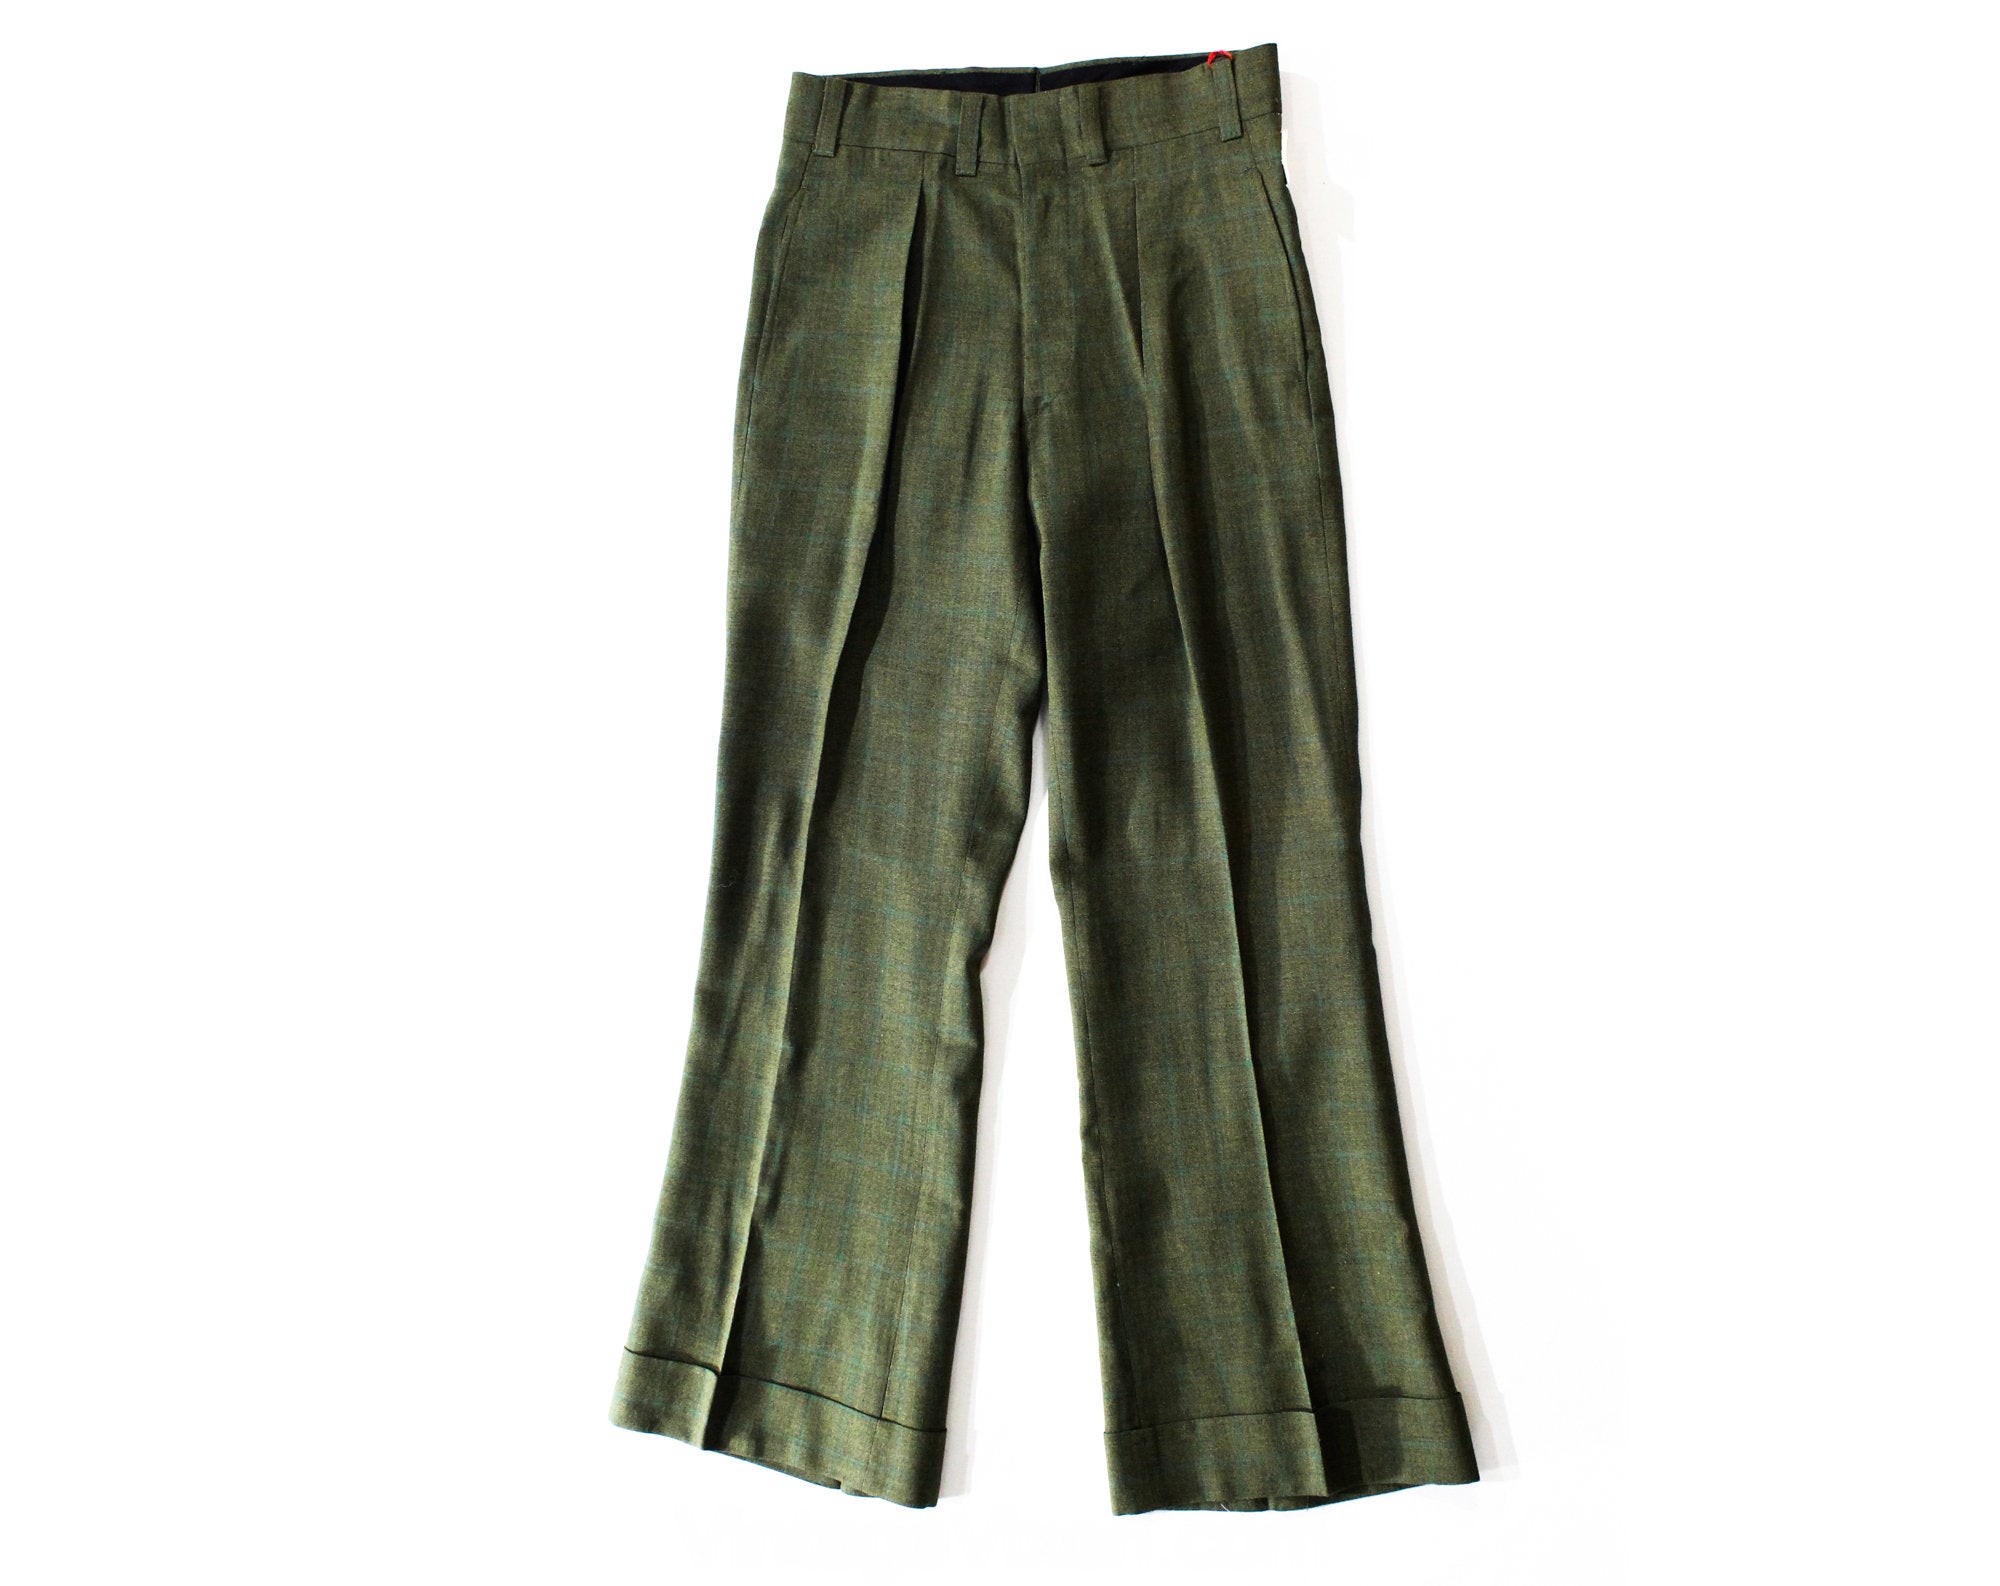 Oxford bags, wide-legged pants for men | Clothes design, Vintage mens  fashion, Clothes